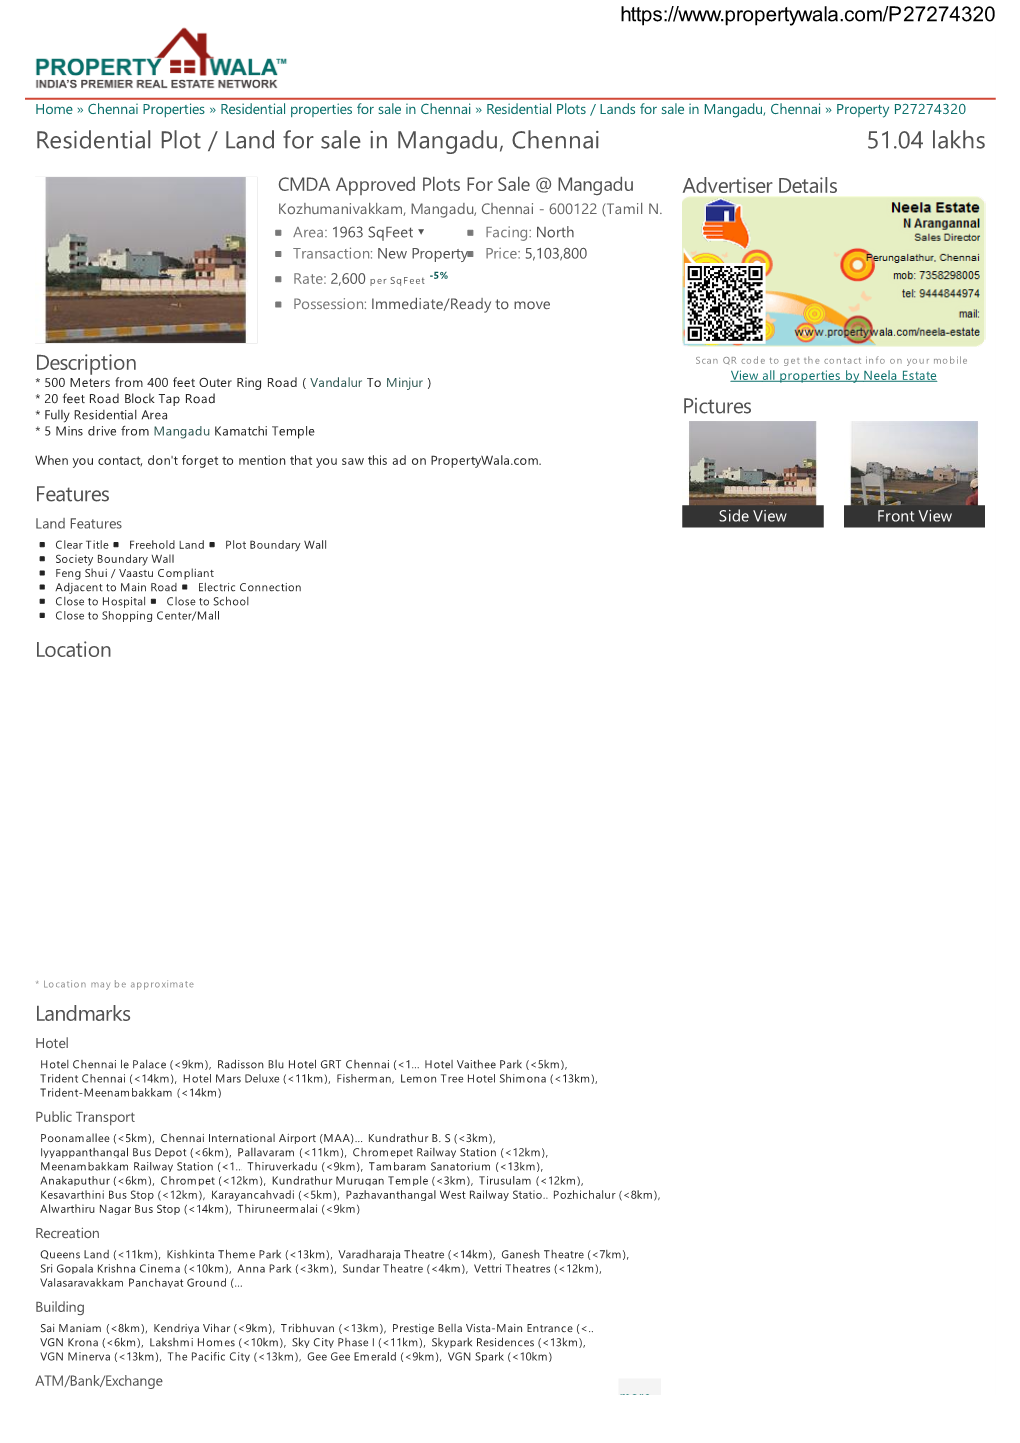 Residential Plot / Land for Sale in Mangadu, Chennai (P27274320)